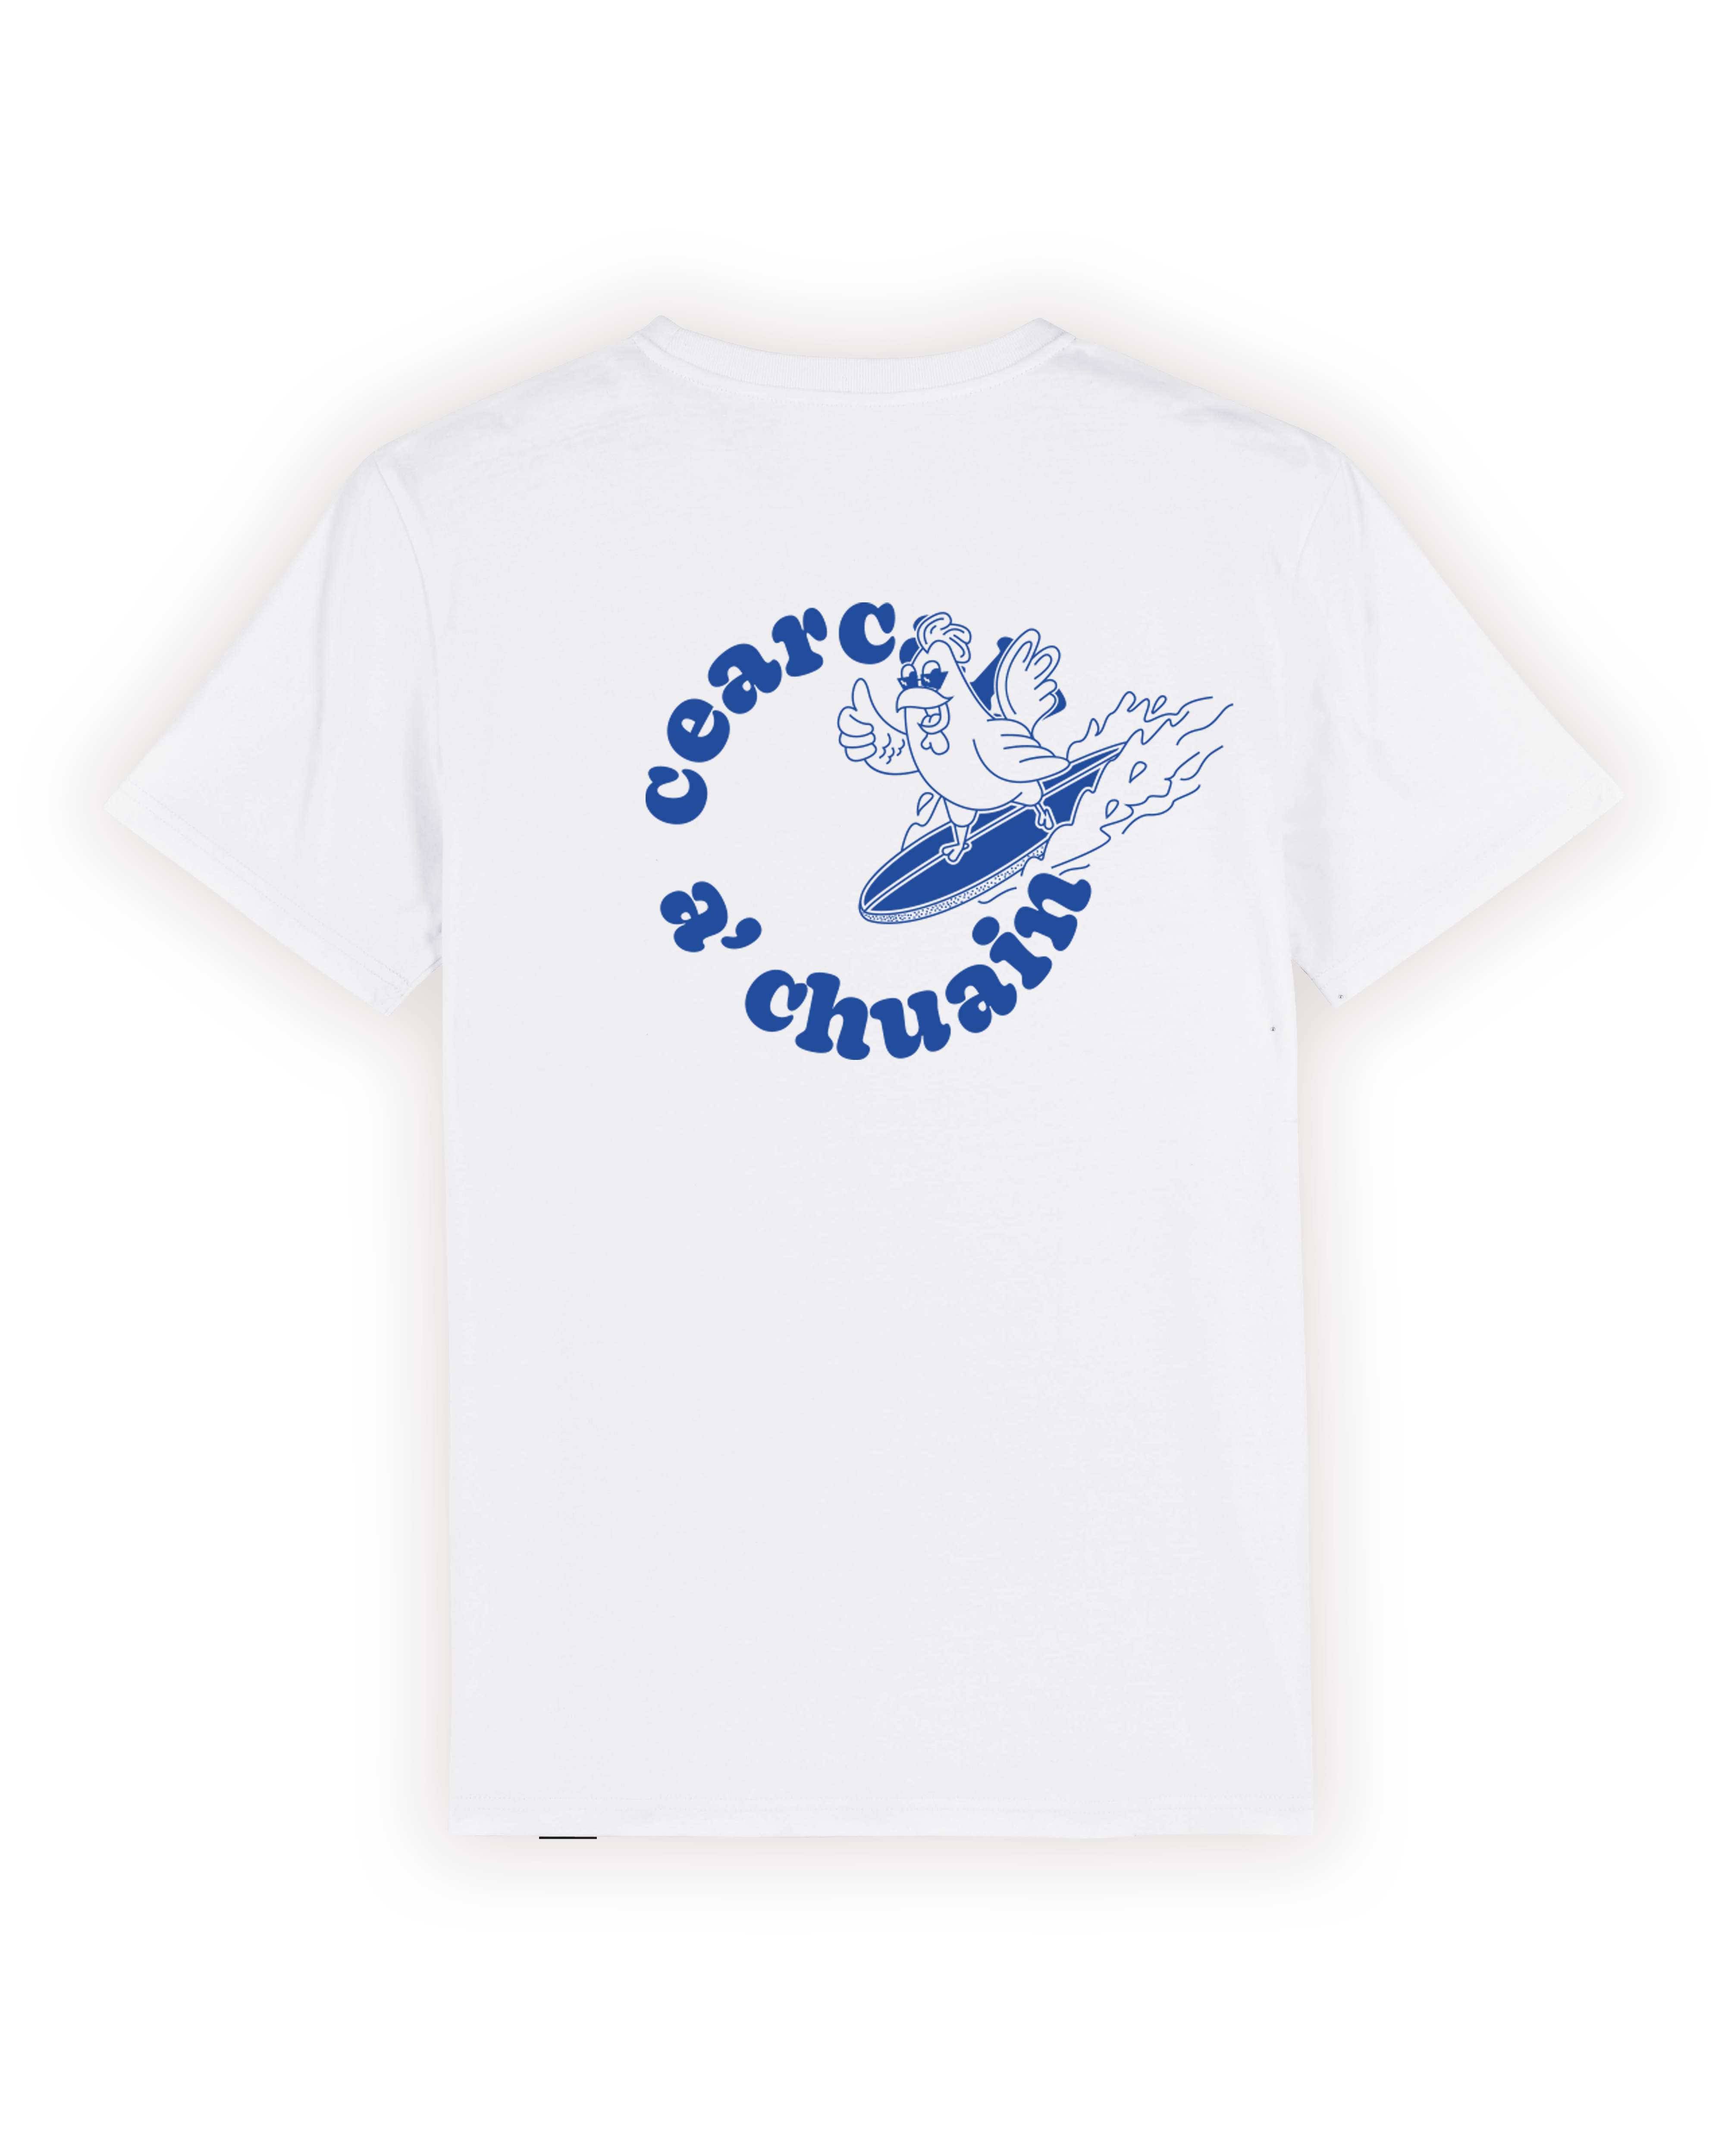 Cearc a' Chuain T-Shirt - Sona Design